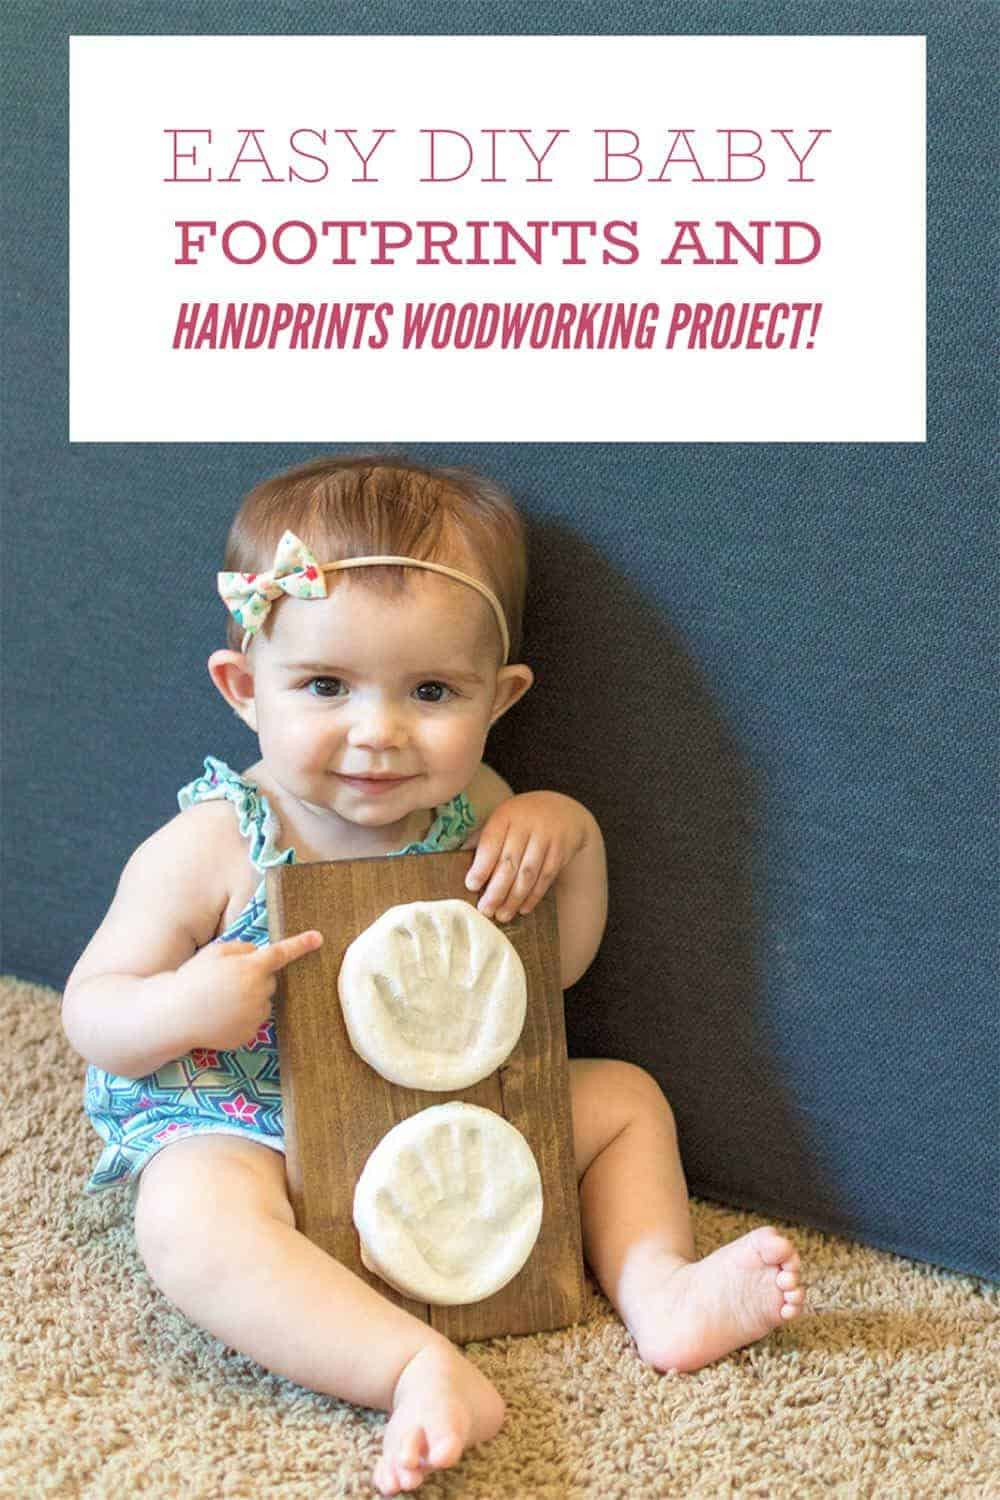 Diy Baby Footprint
 Easy DIY Baby Footprints and Handprints Woodworking Project